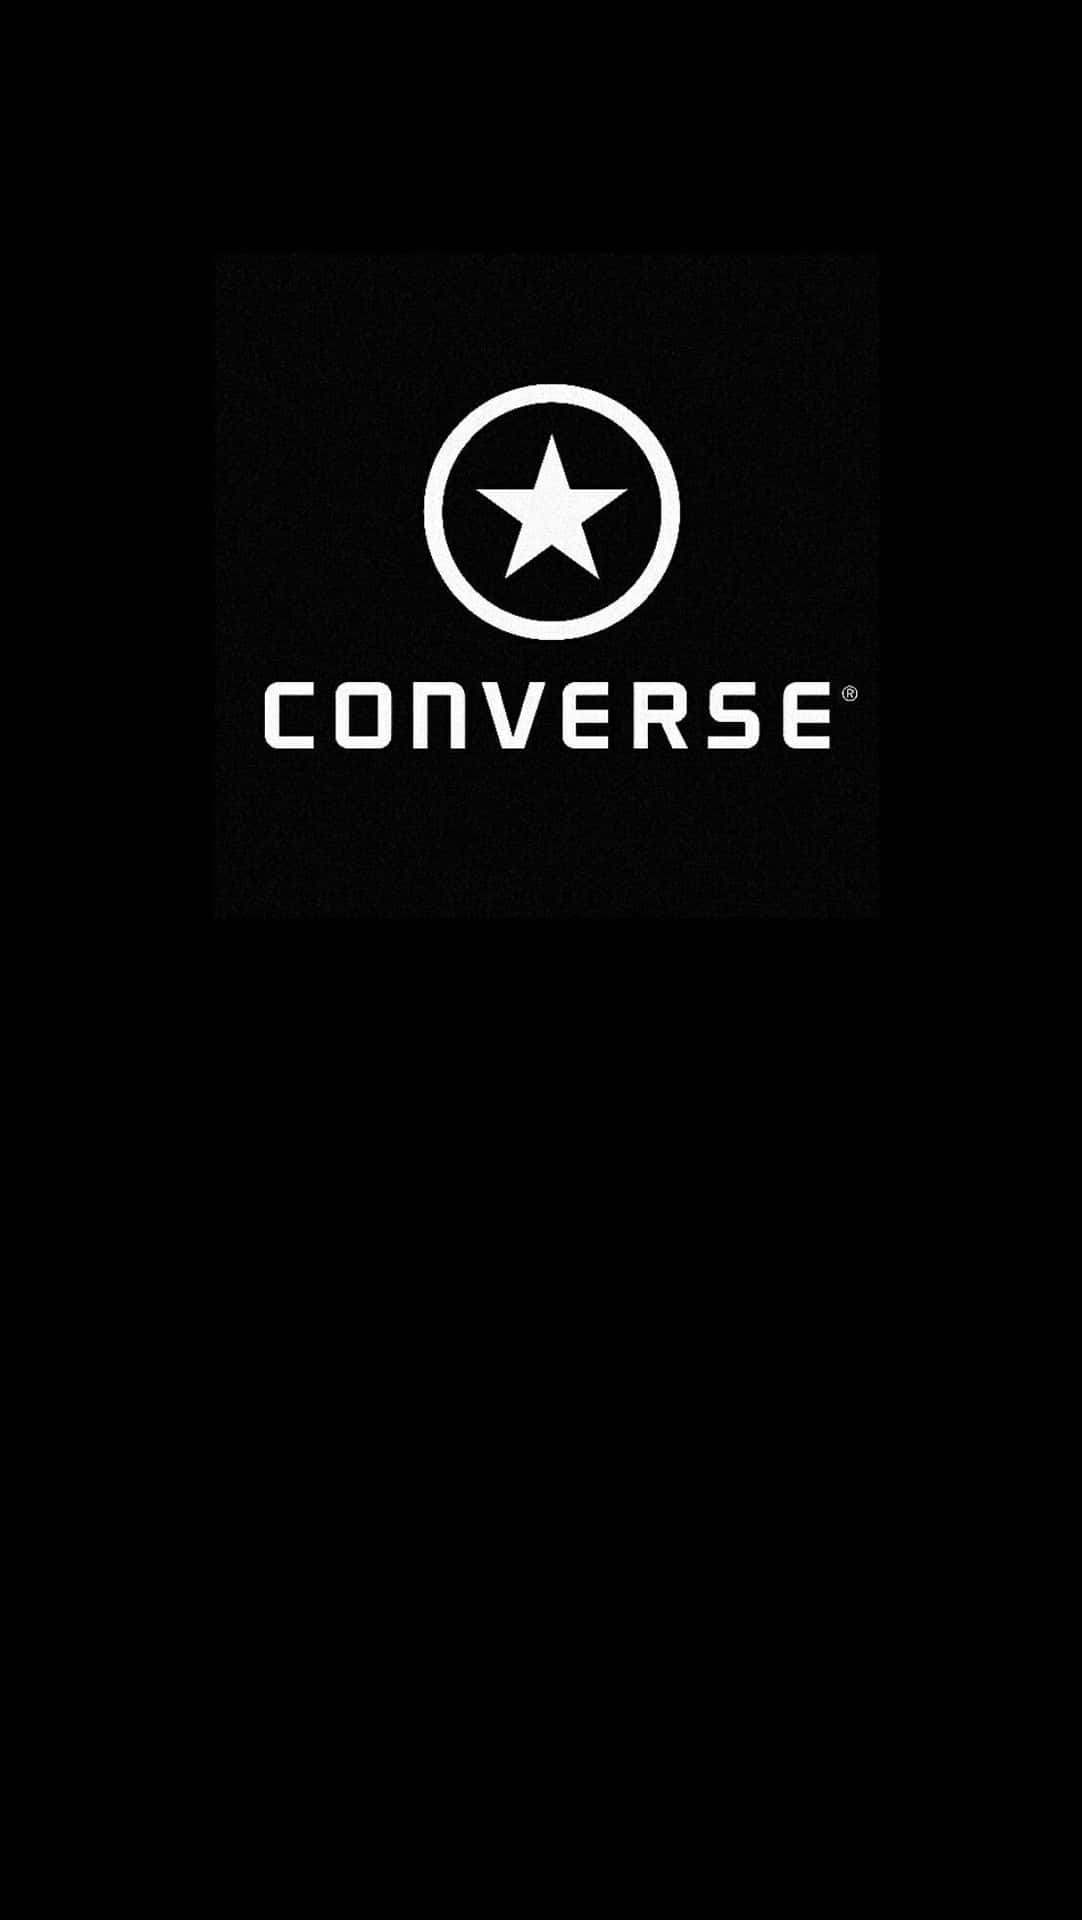 Bakgrundmed Converse-logotypen.